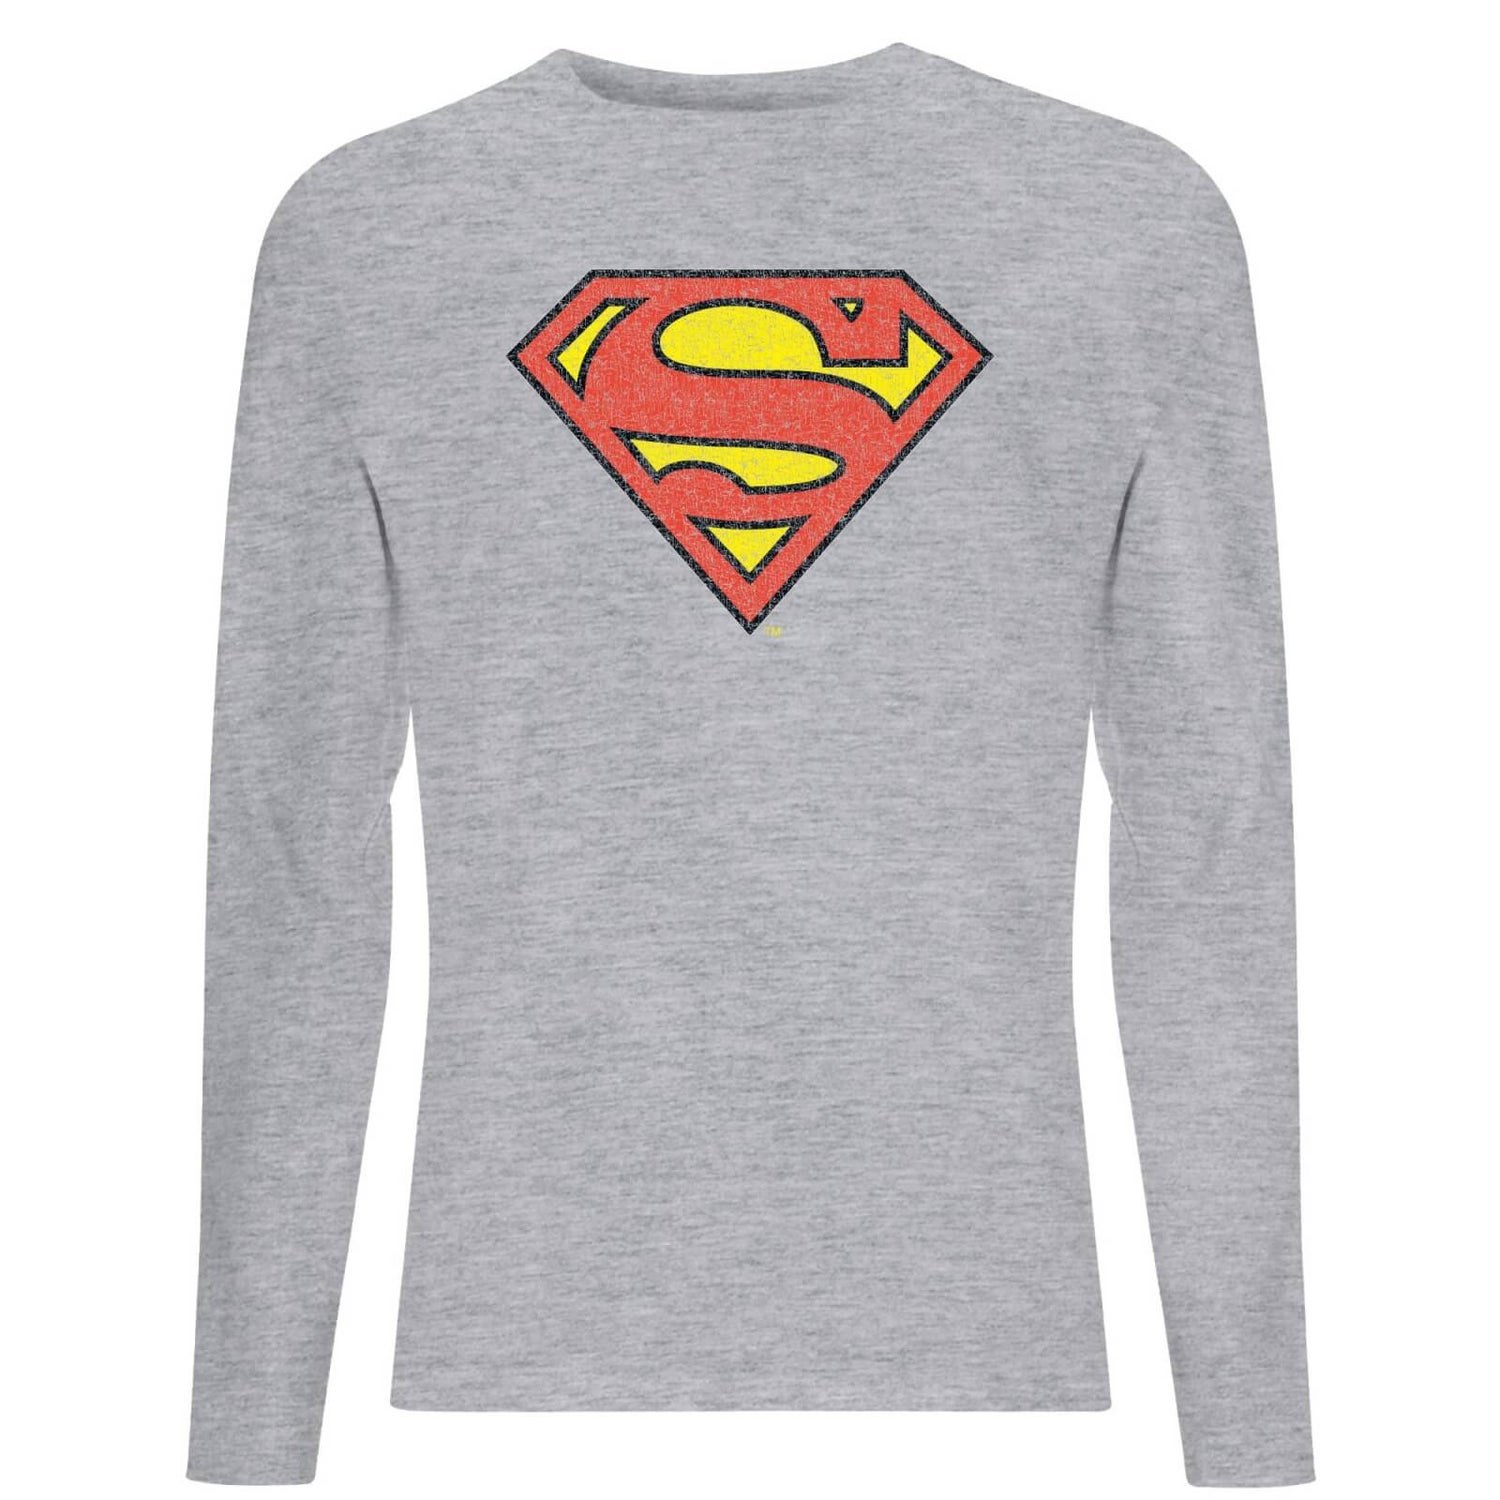 Official Superman Crackle Logo Men's Long Sleeve T-Shirt - Grey